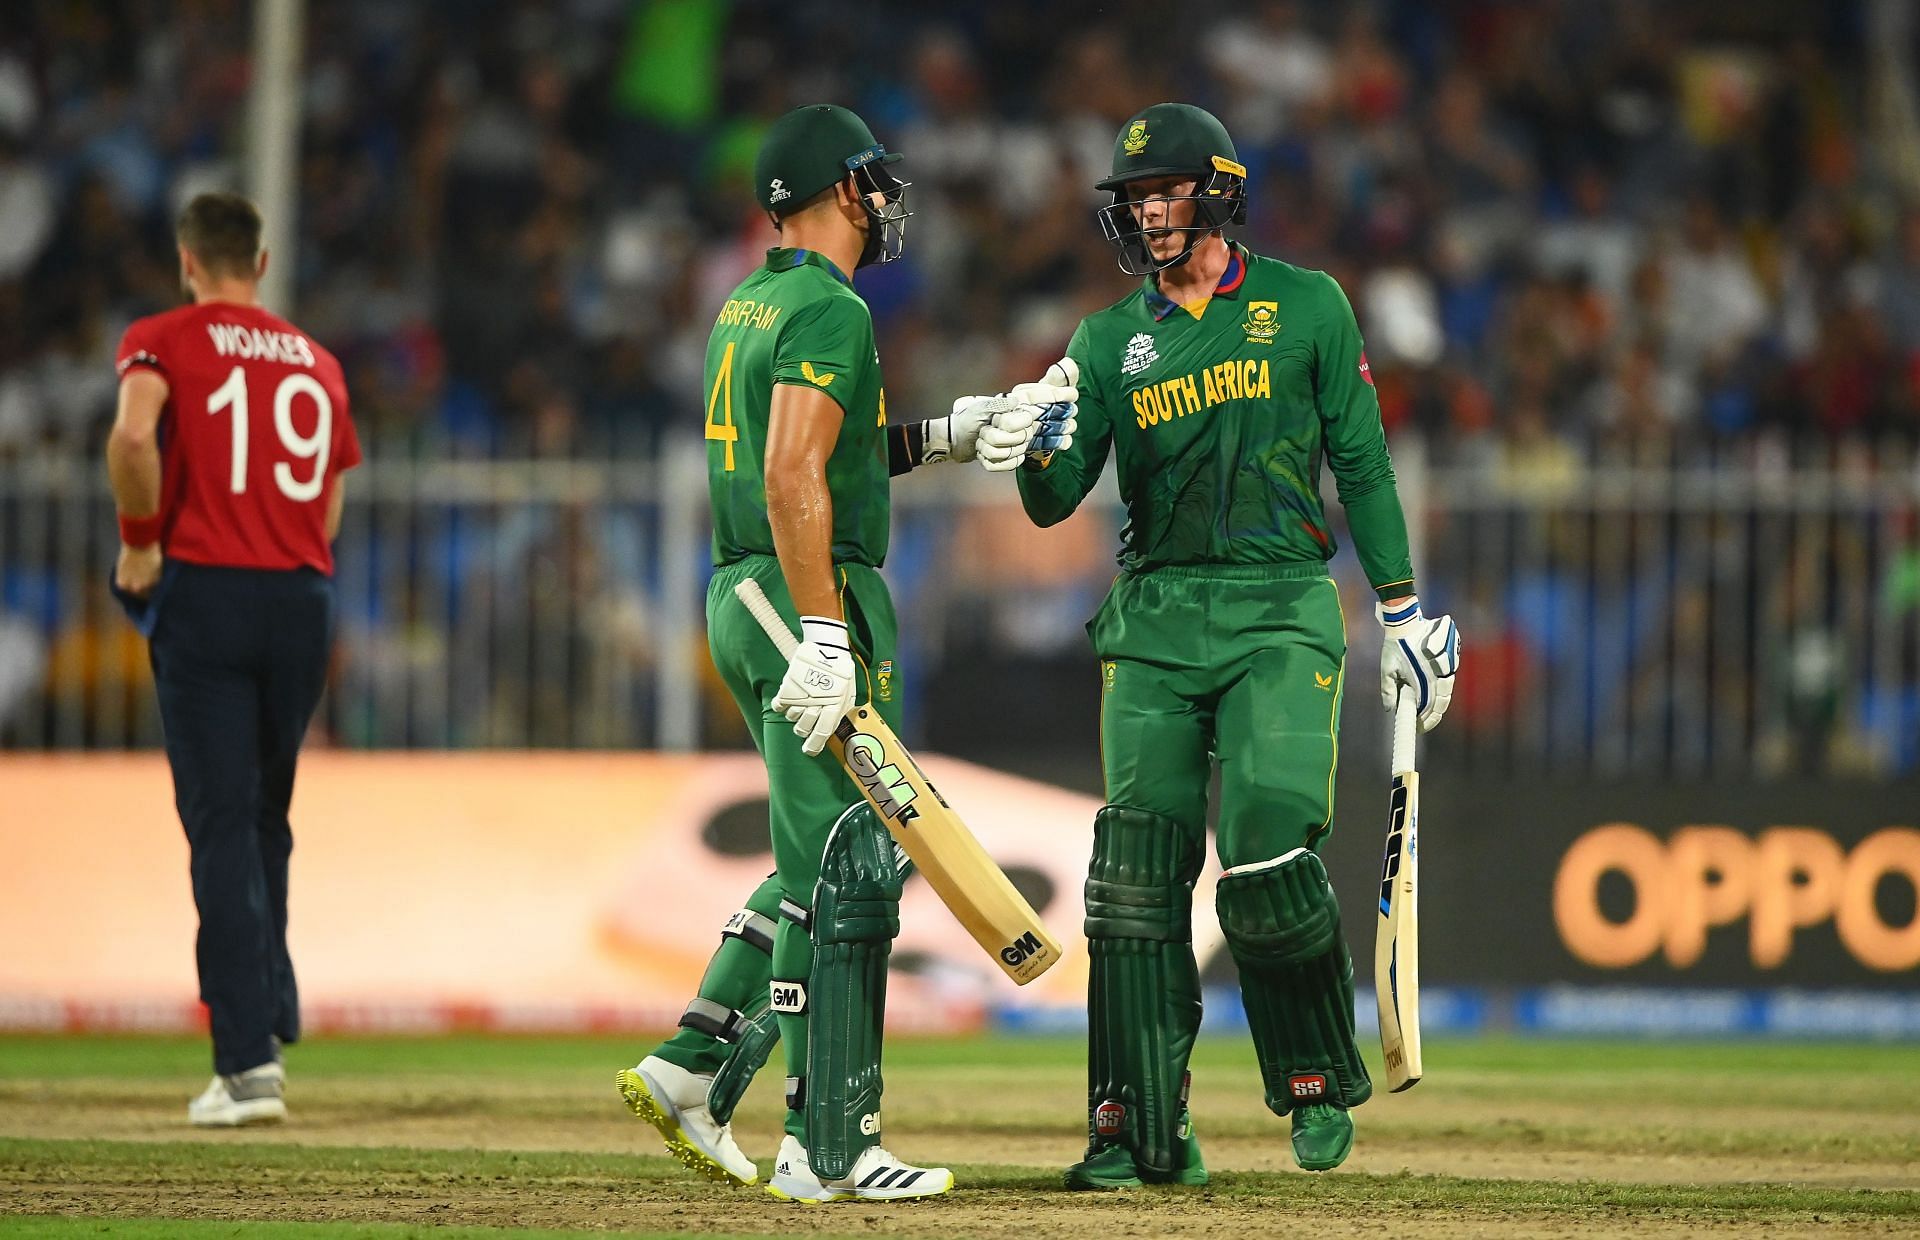 Rassie van der Dussen and Aiden Markram scored the majority of runs for South Africa in ICC T20 World Cup 2021